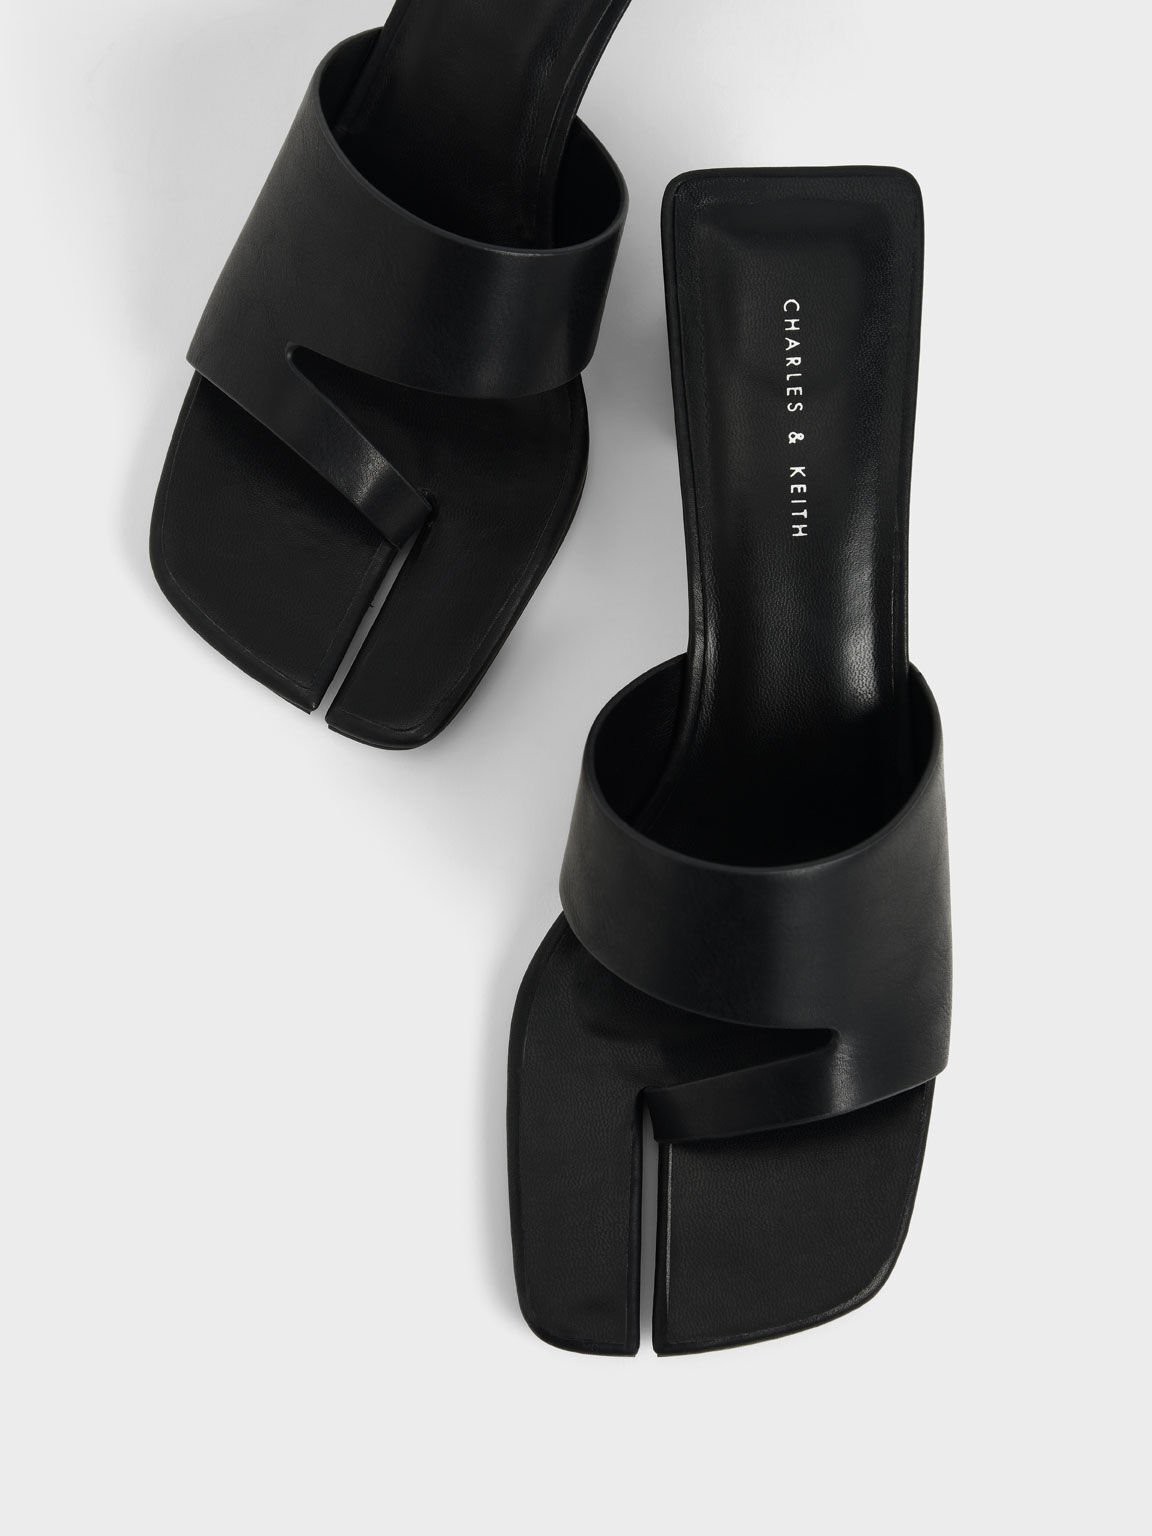 Cut-Out Thong Sandals, Black, hi-res